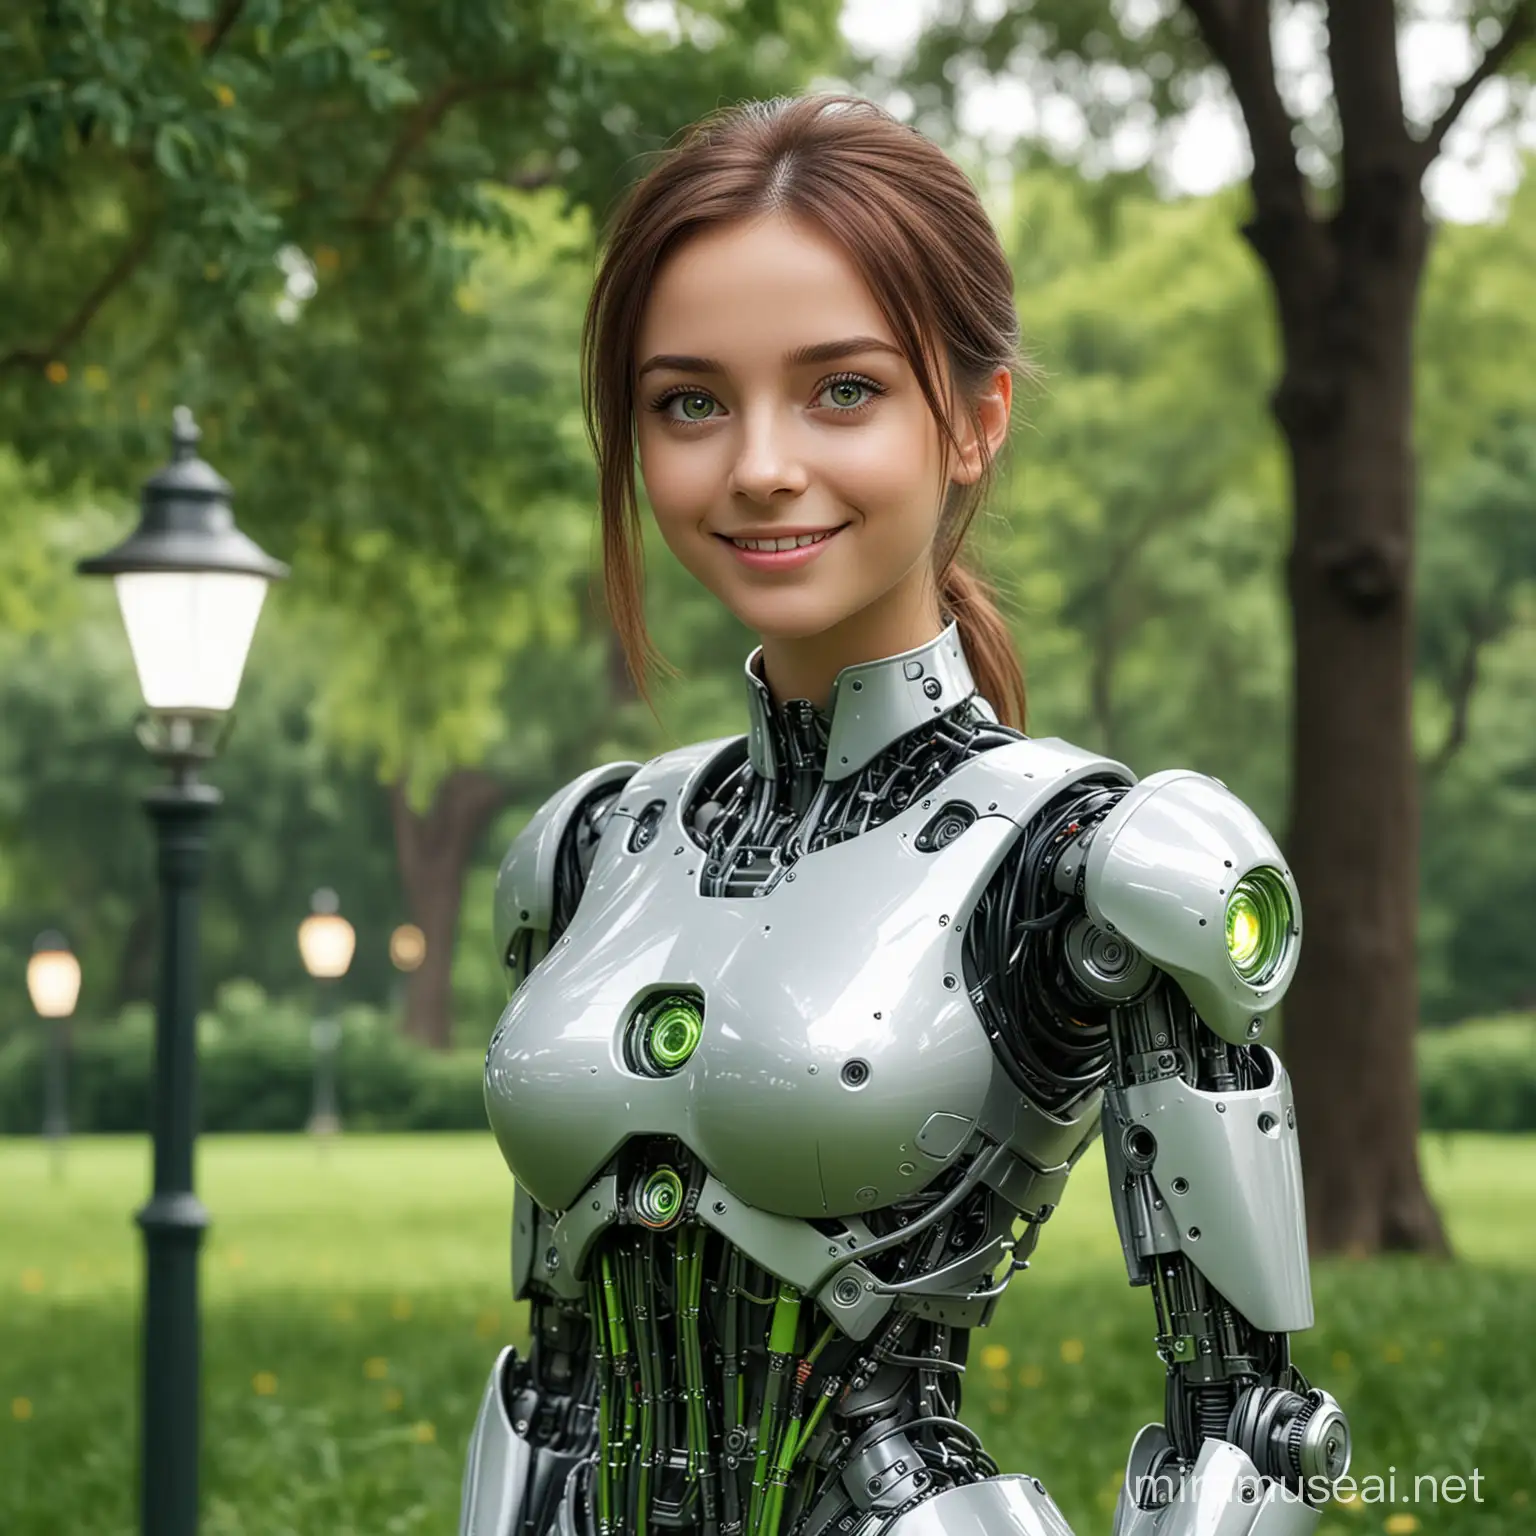 Cheerful Robot Girl Portrait in Green Park